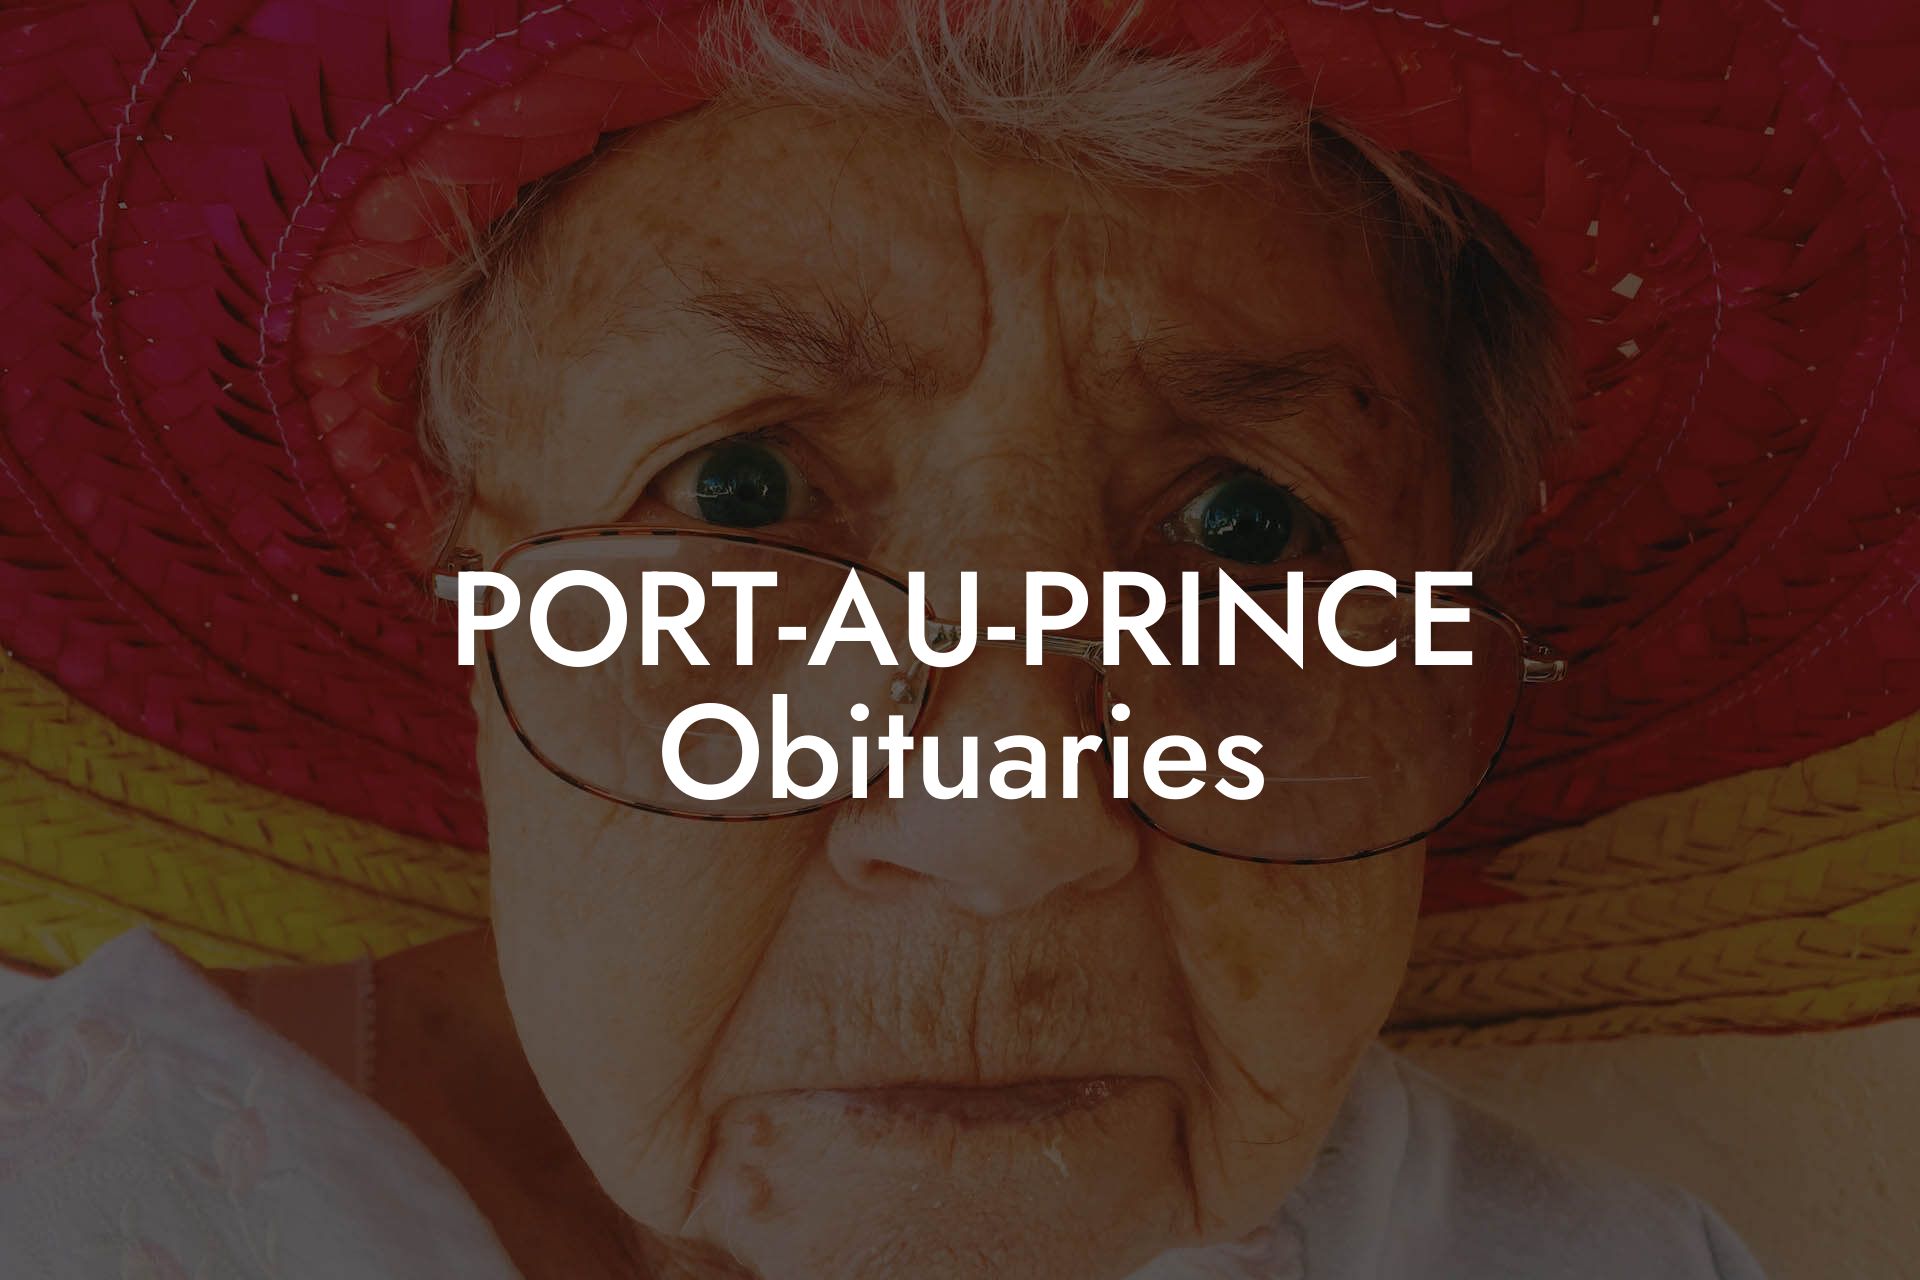 PORT-AU-PRINCE Obituaries